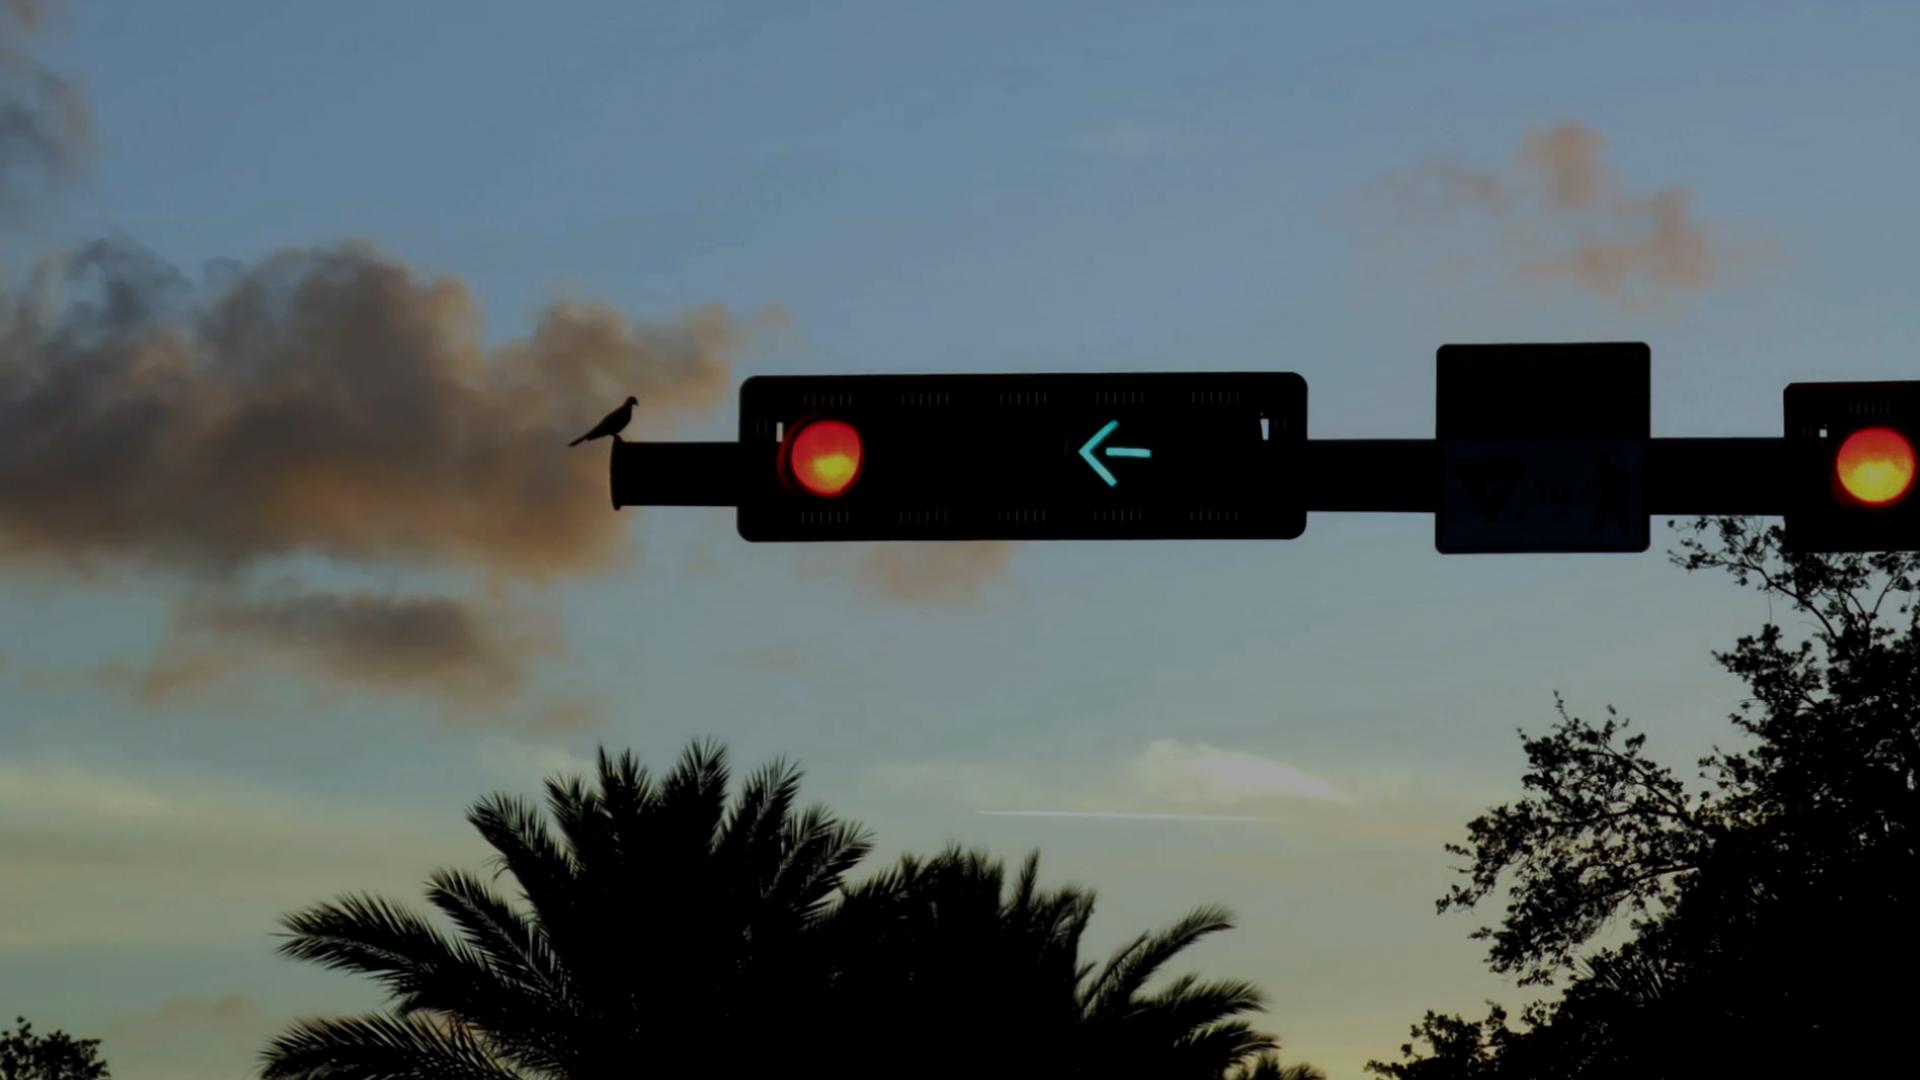 Photograph of traffic light